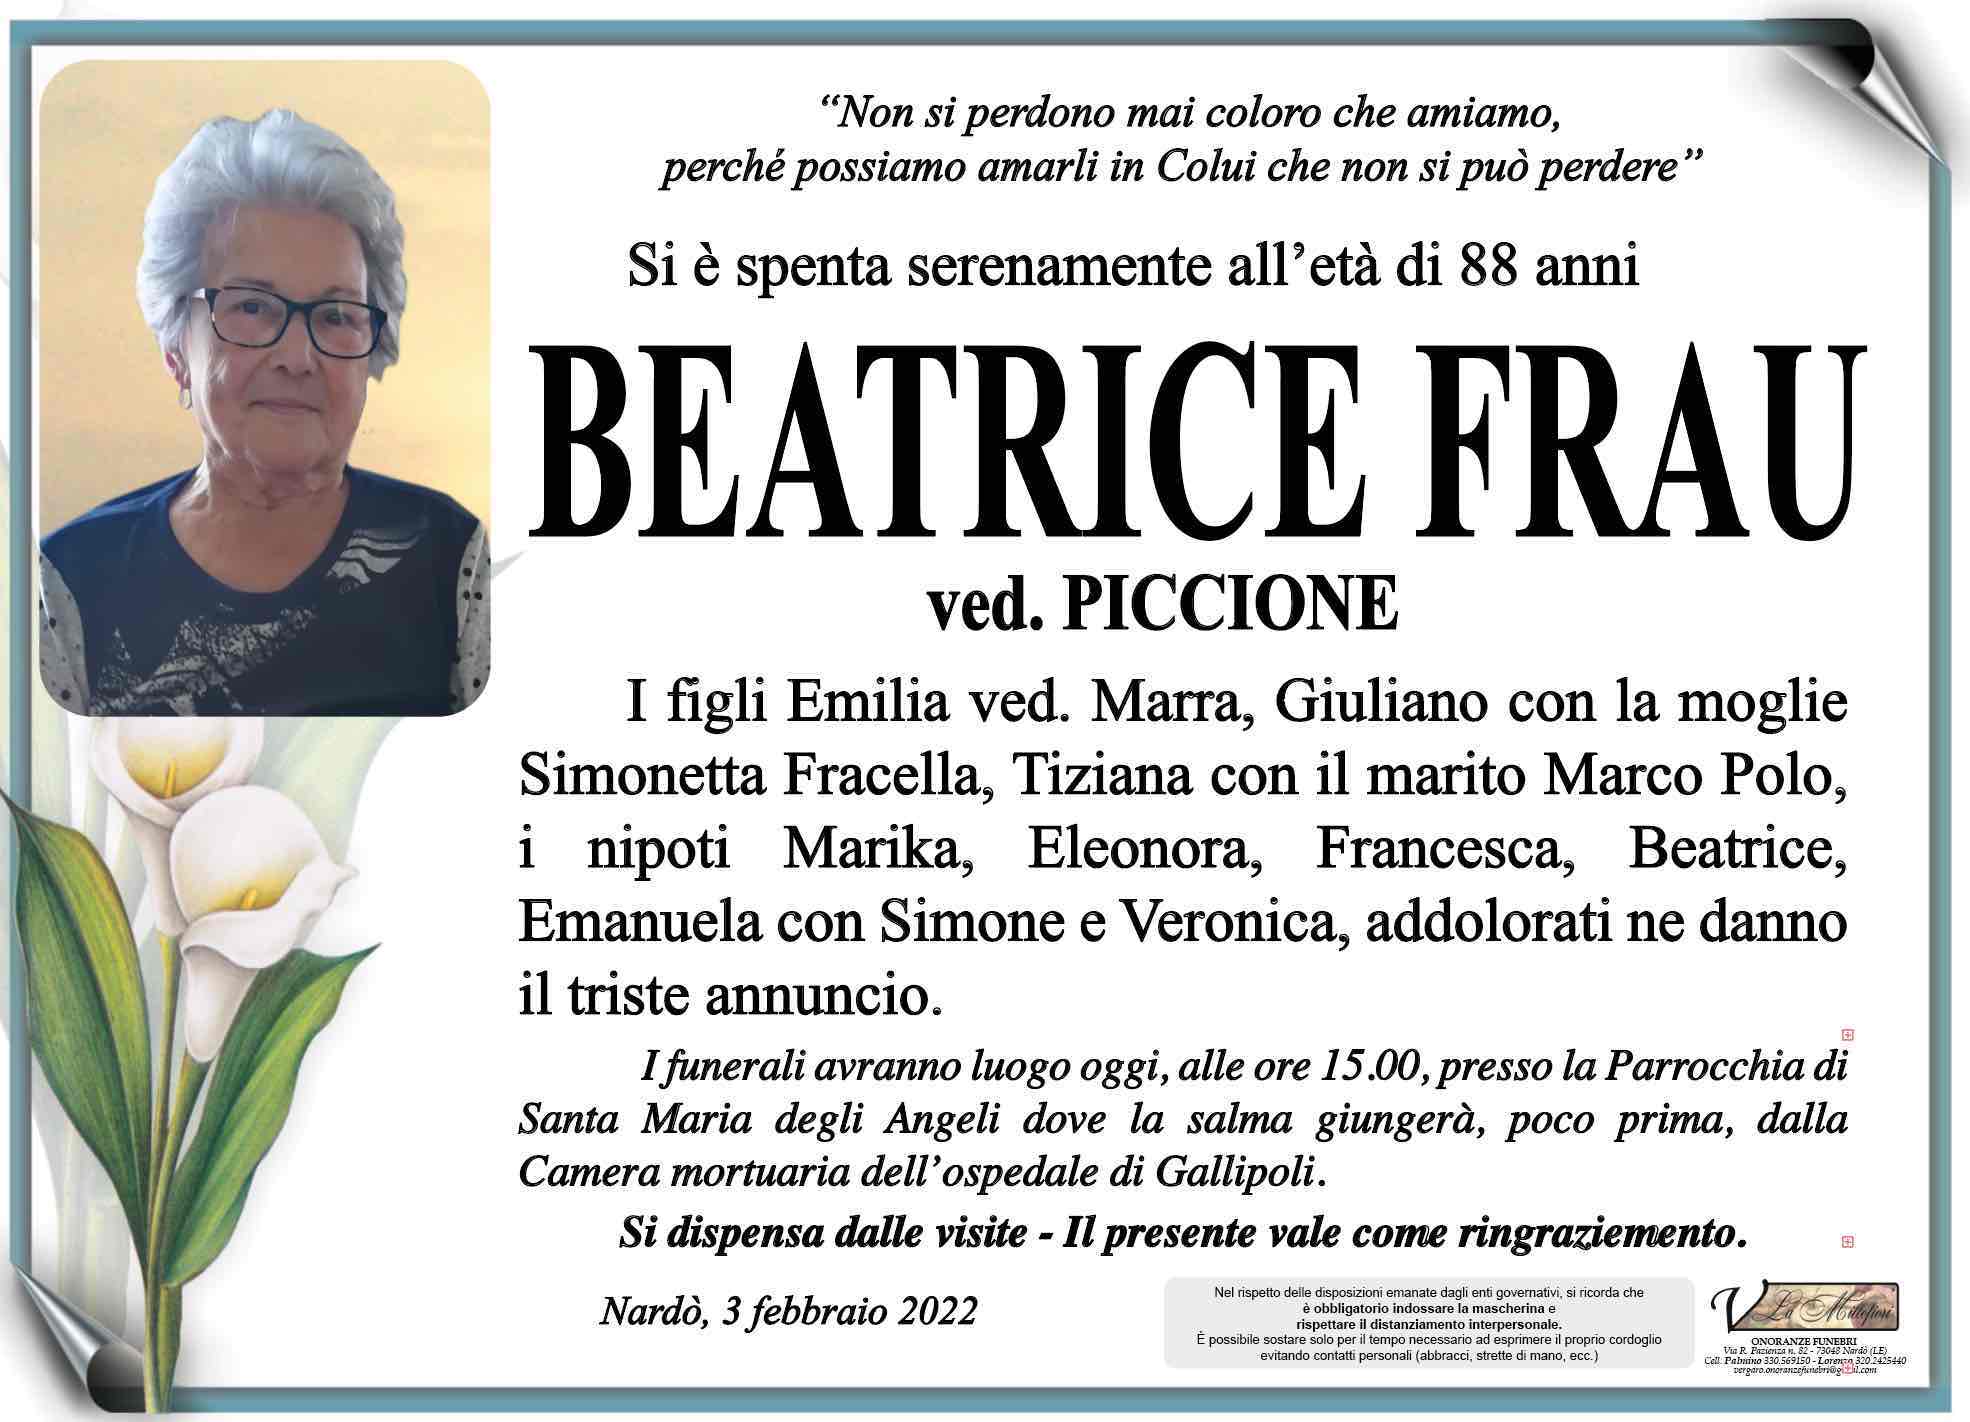 Beatrice Frau